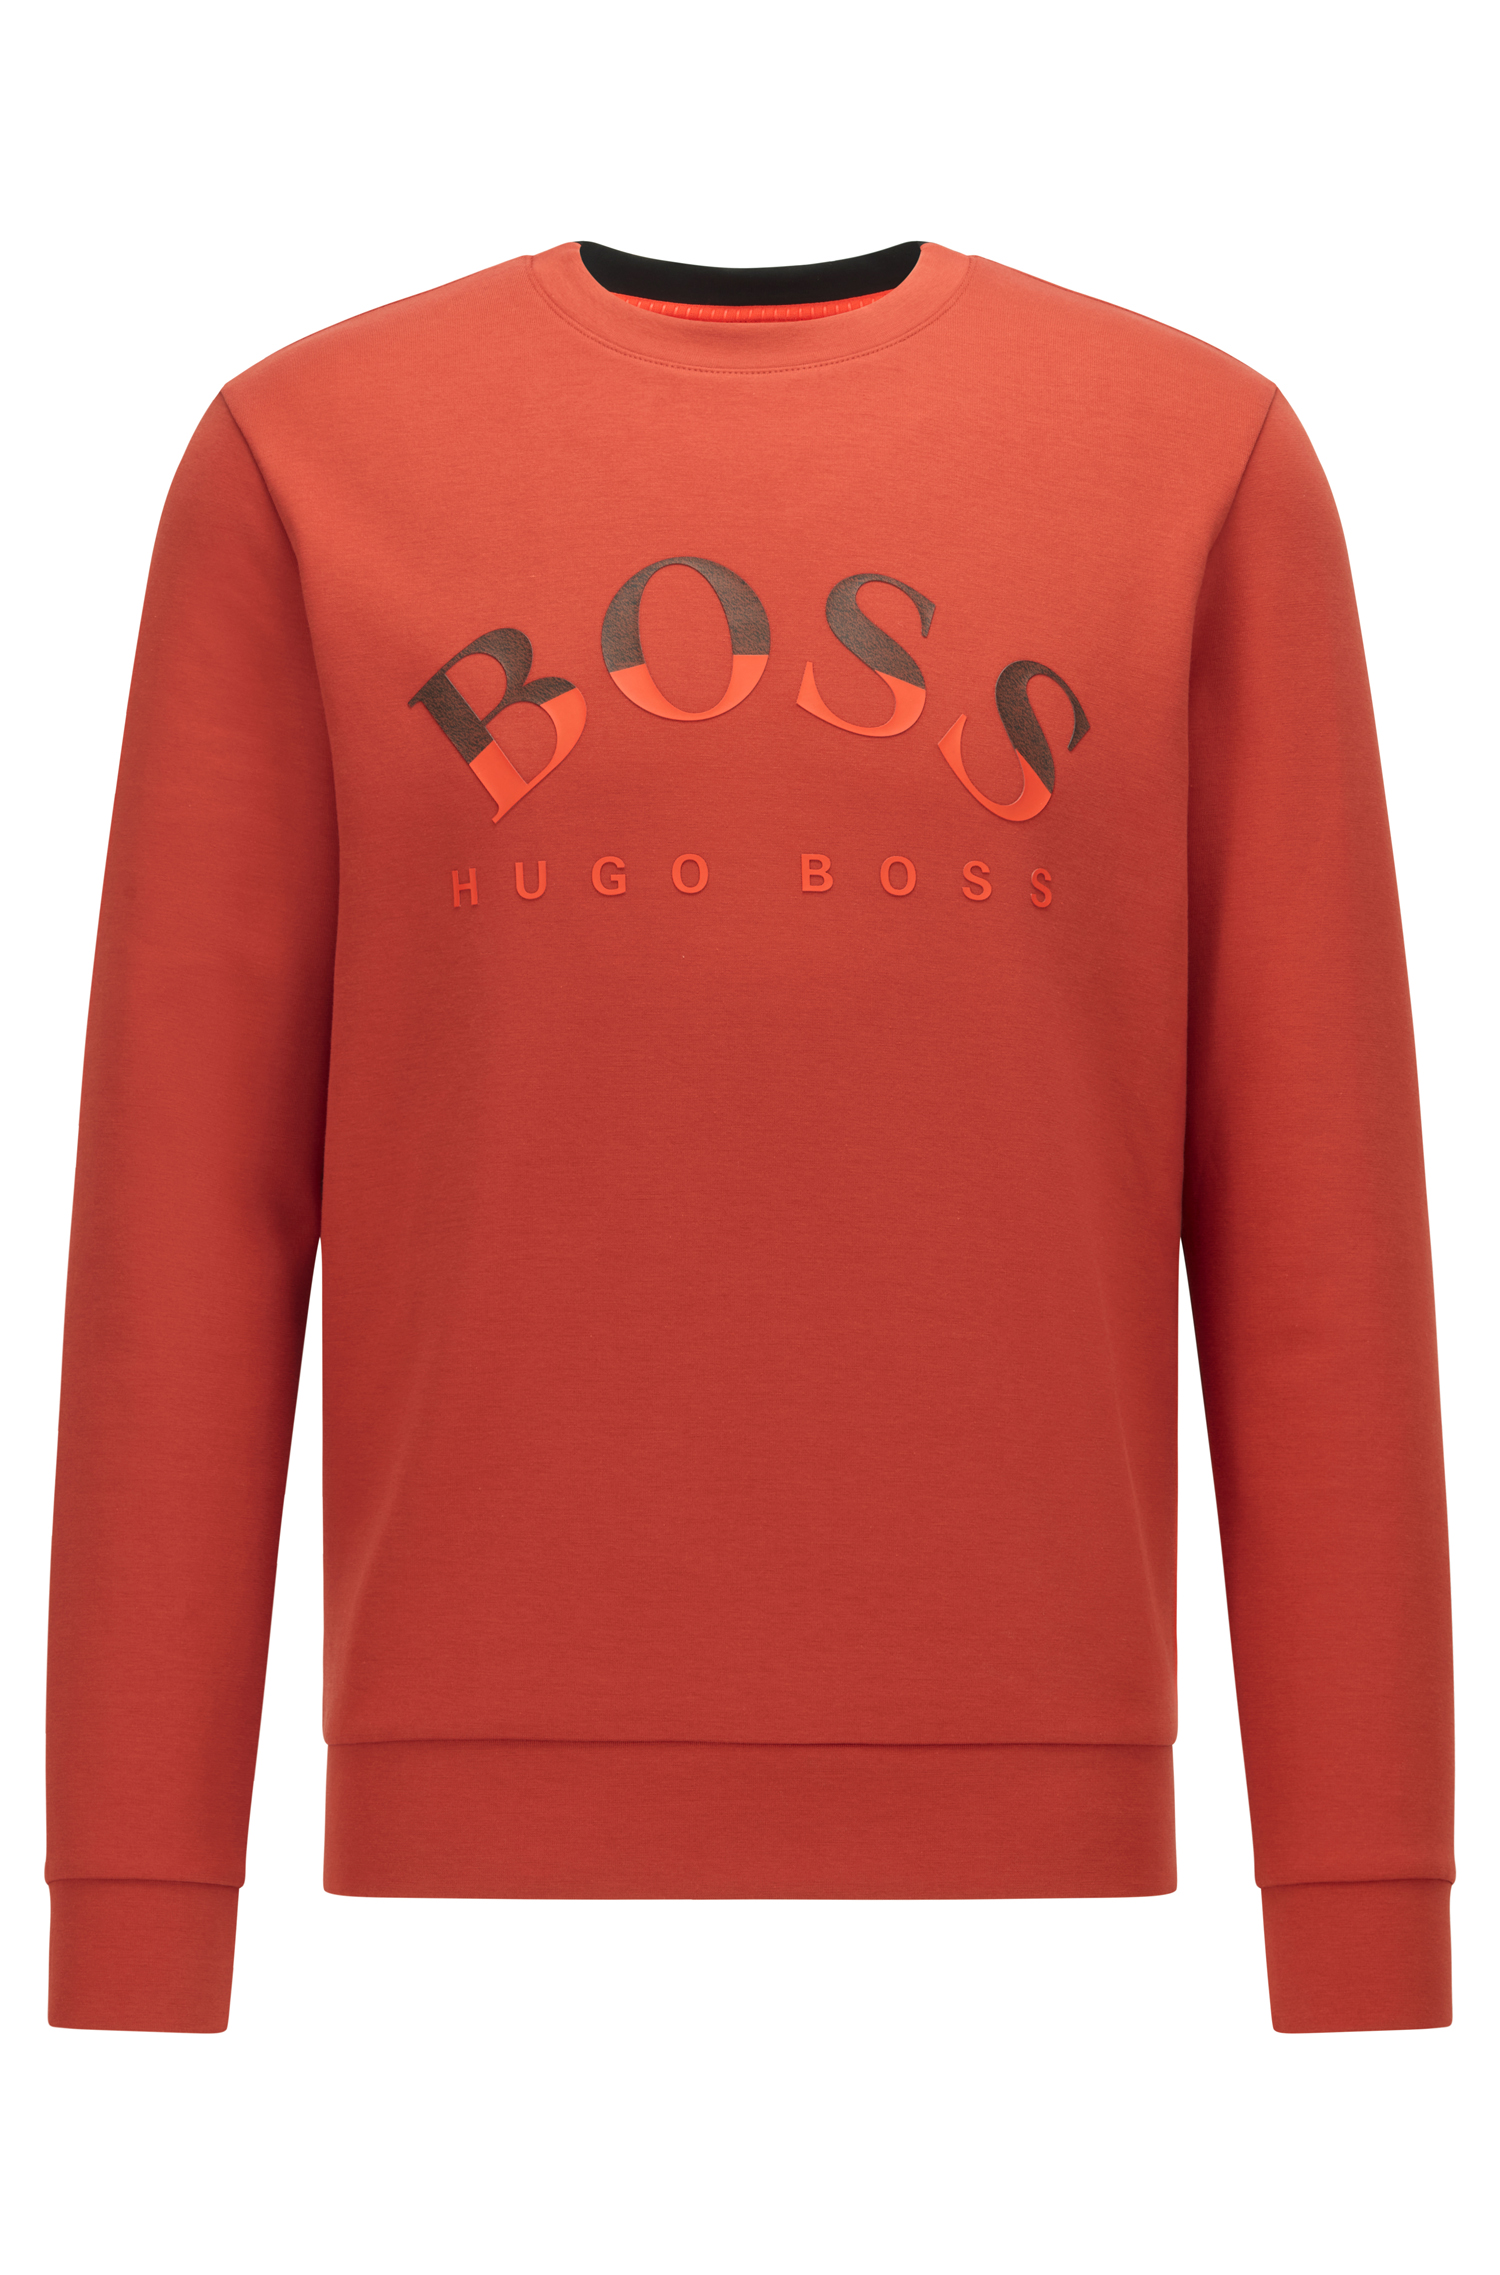 Boss Orange Sweatshirt, Rød, L